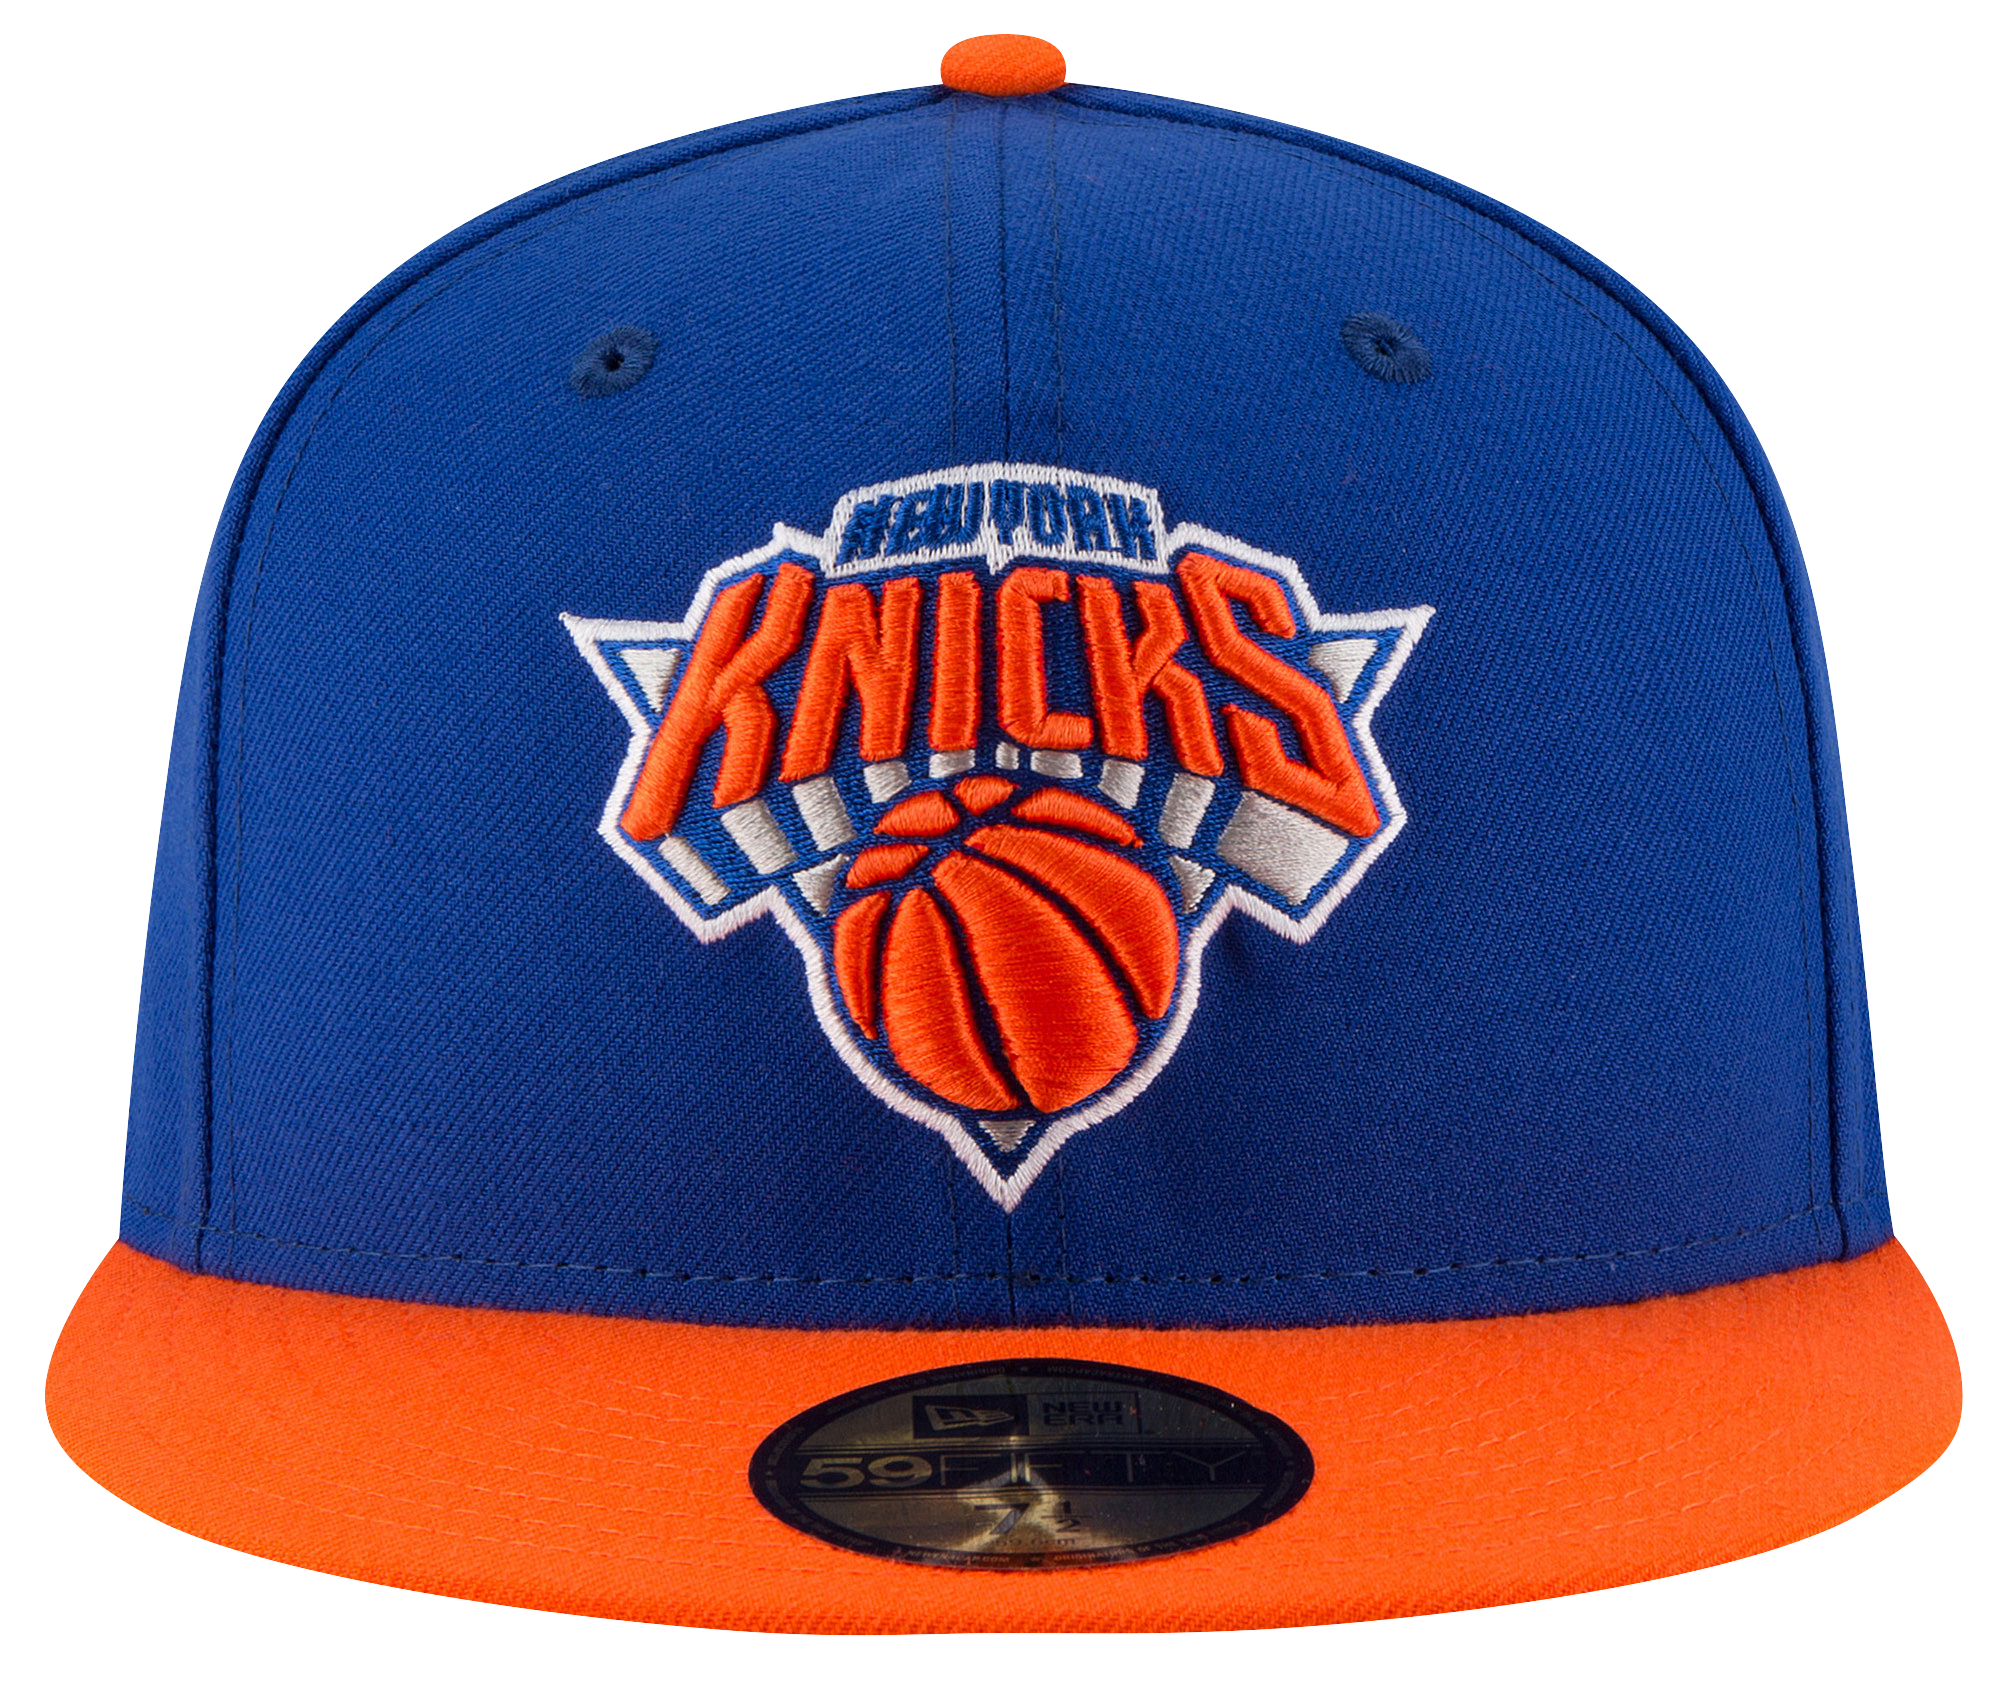 New Era Knicks 2-Tone Team Cap